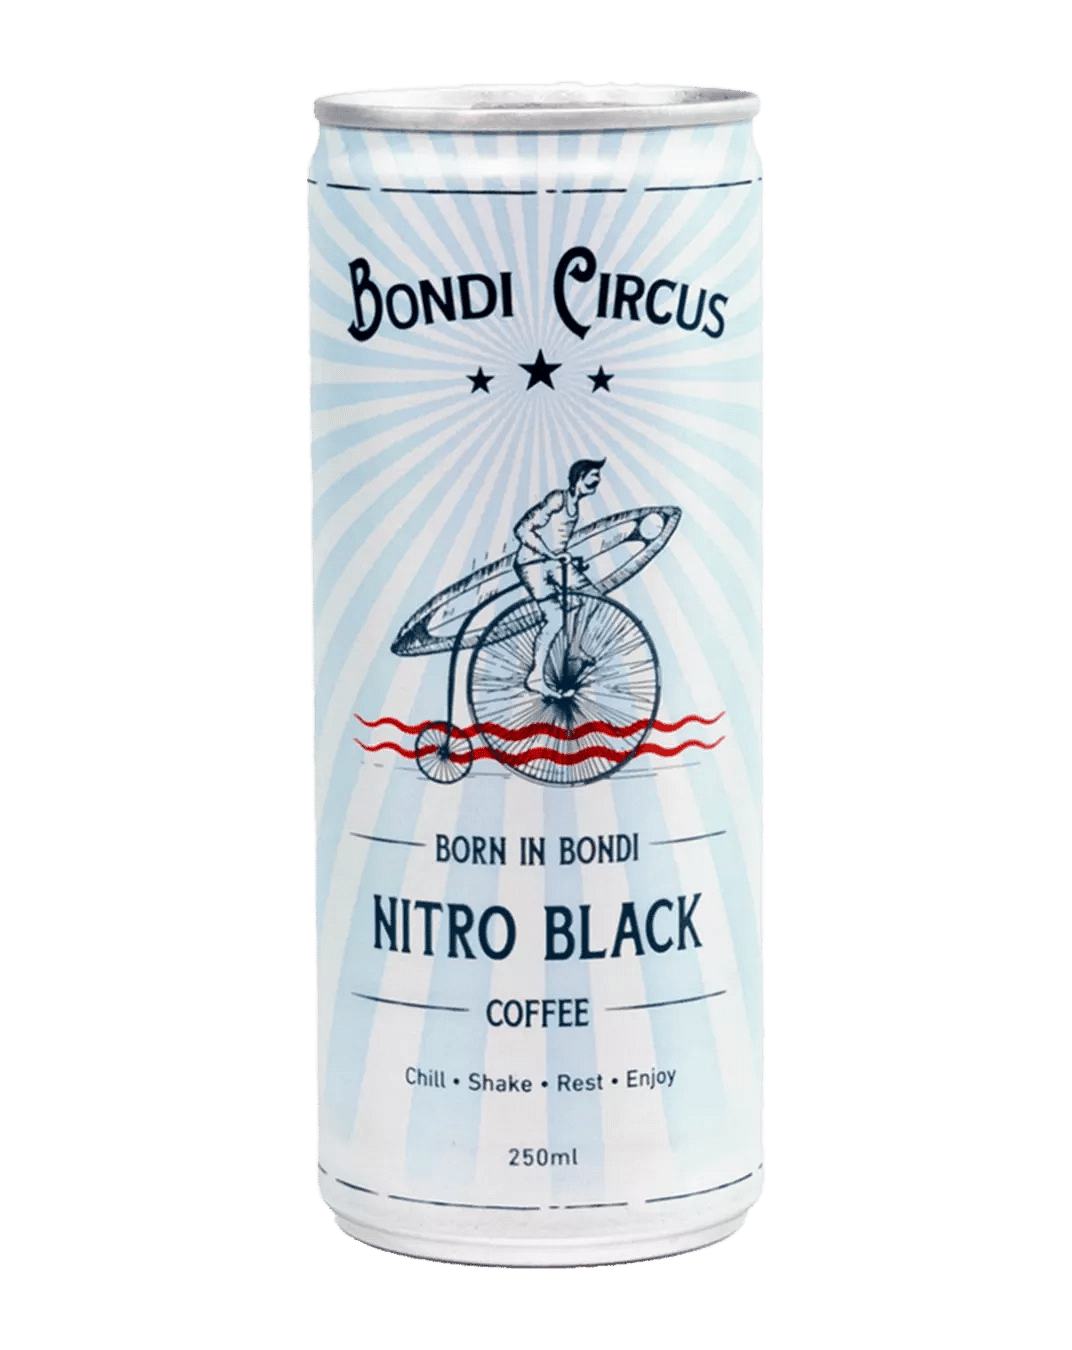 Bondi Circus Nitro Black